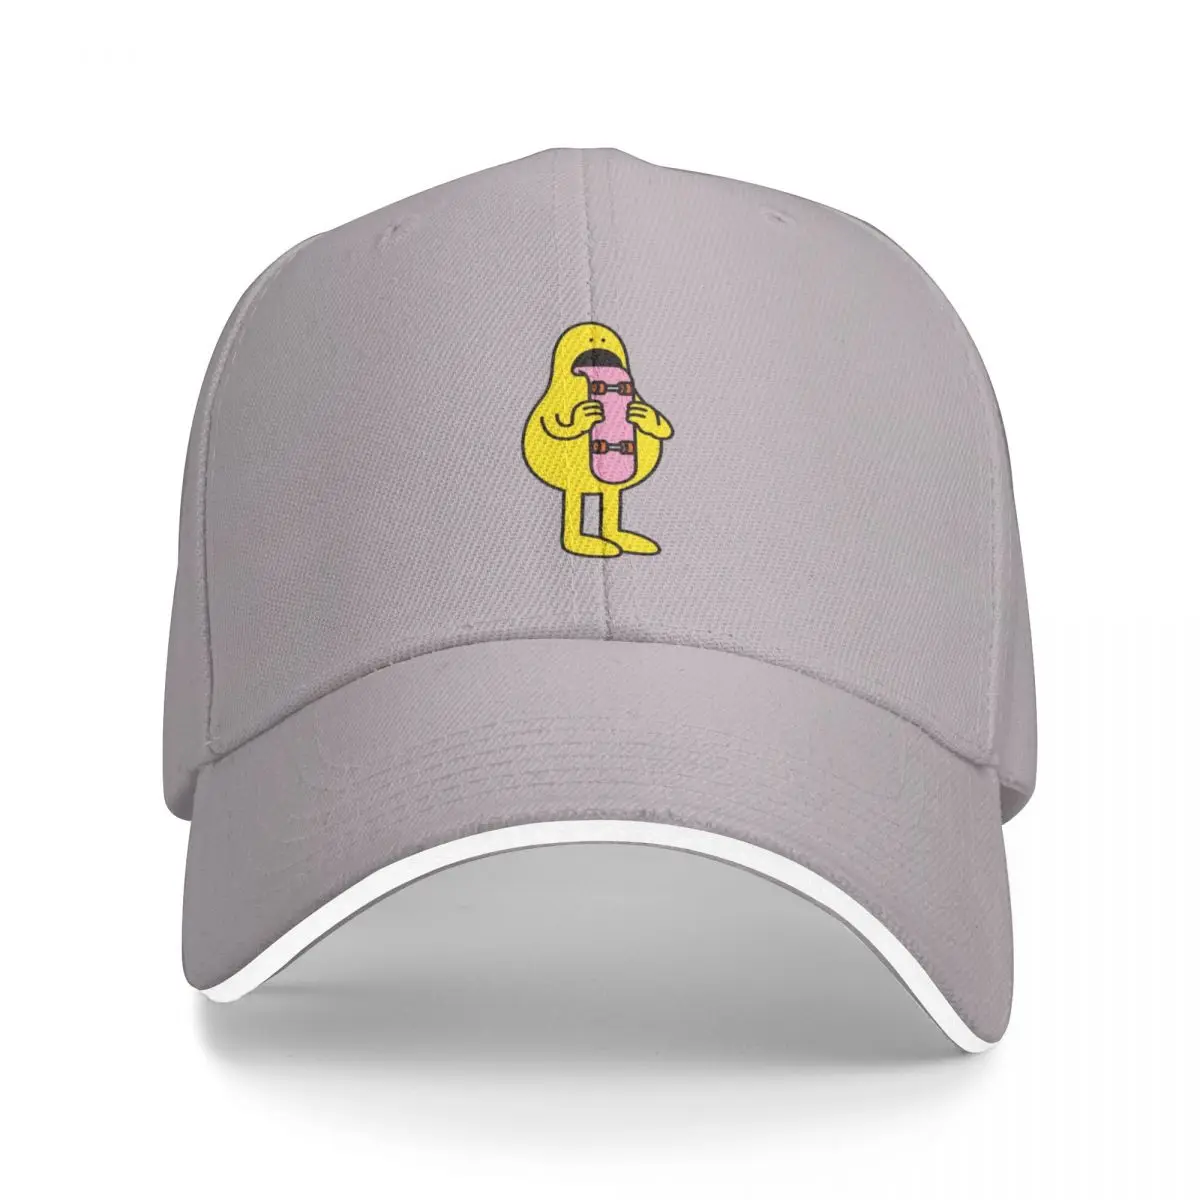 

Skateboard Tongue Cap Baseball Cap hat luxury brand Sun cap fashion hat women Men's